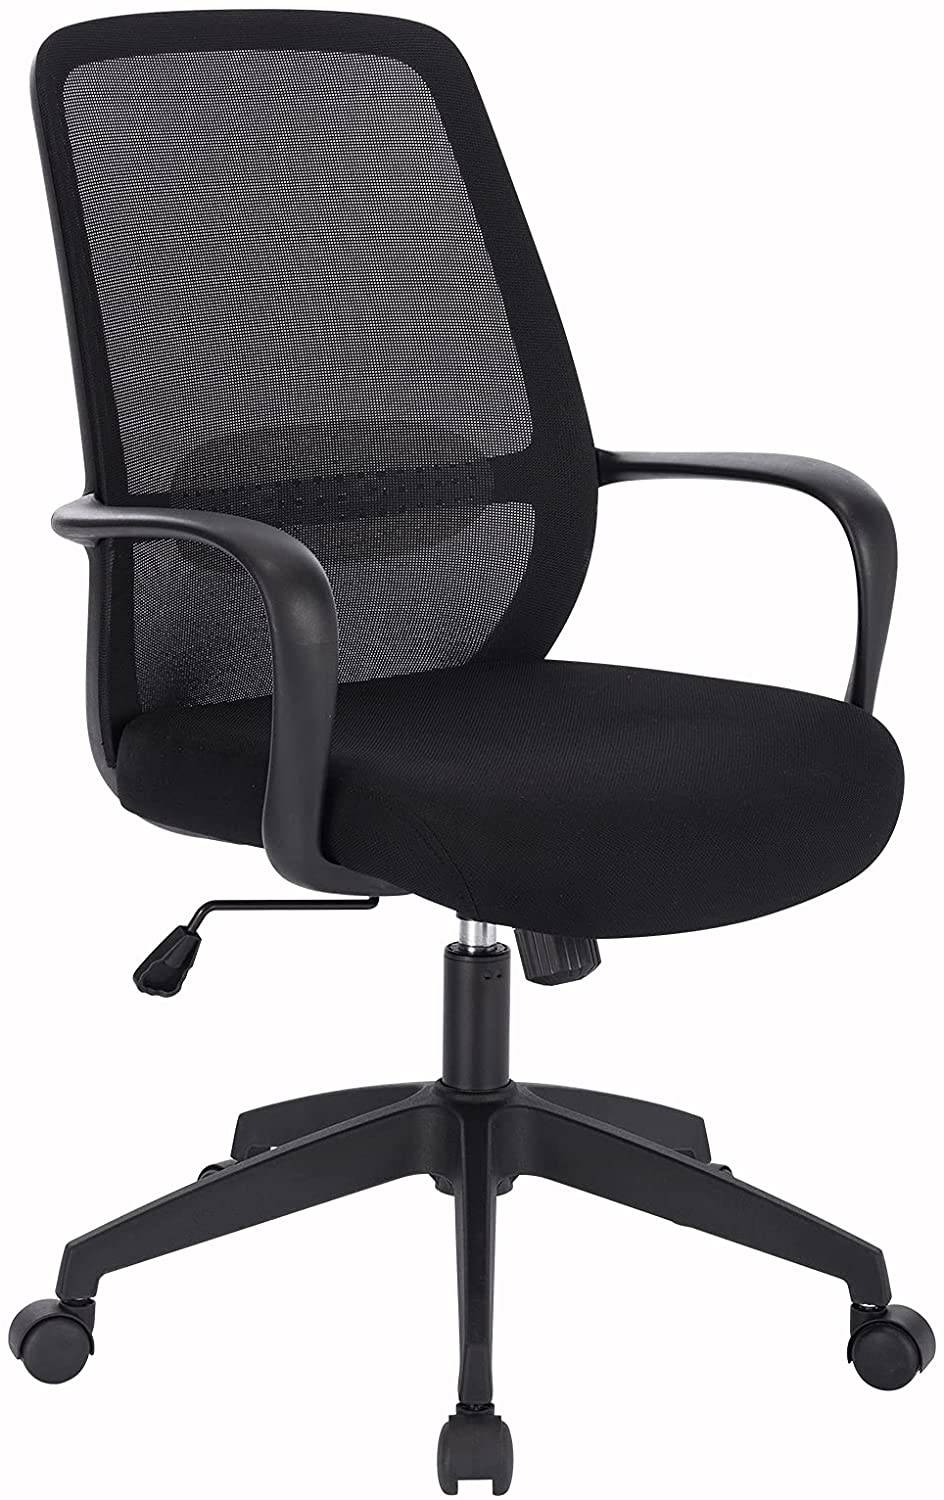 AYNEFY Bürostuhl Stuhl Schwarz,Schreibtischstuhl Computer Spielstuhl ergonomischer Bürostuhl Schreibtischstuhl Bürostuhl Gaming-Stuhl Neigbar mit Fußstütze